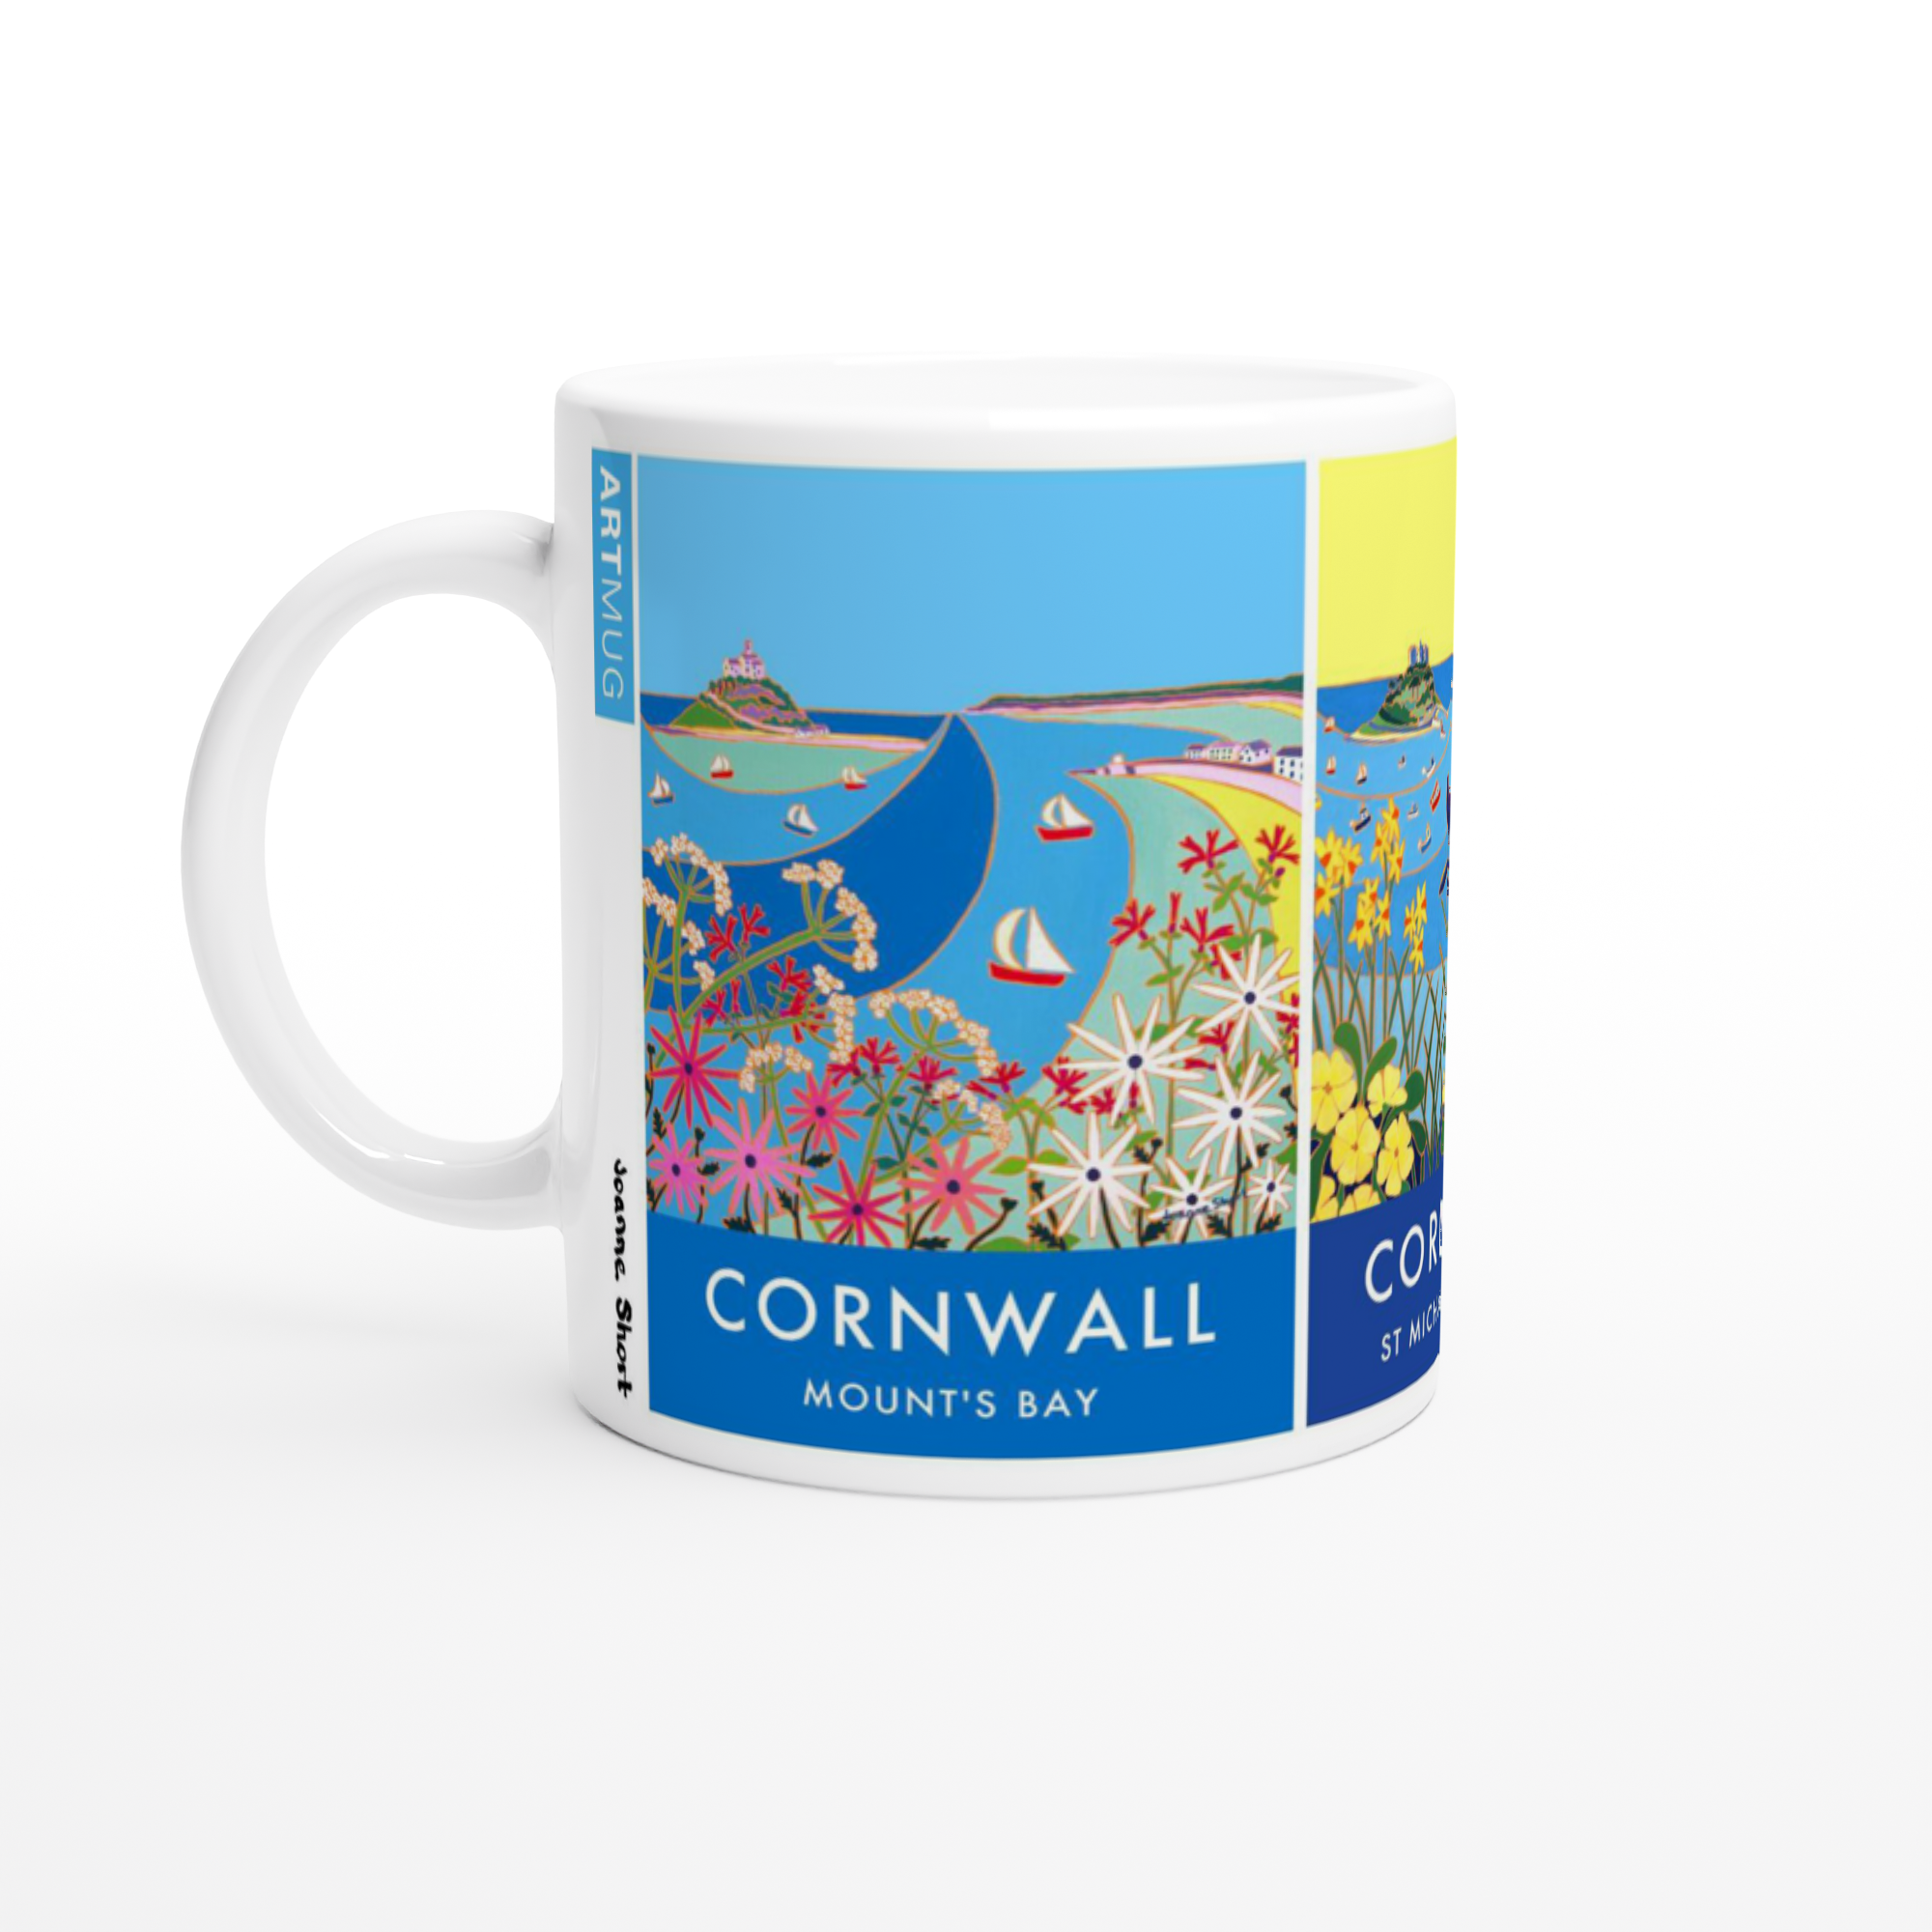 Art Mug featuring St Michael's Mount in Cornwall by Artist Joanne Short